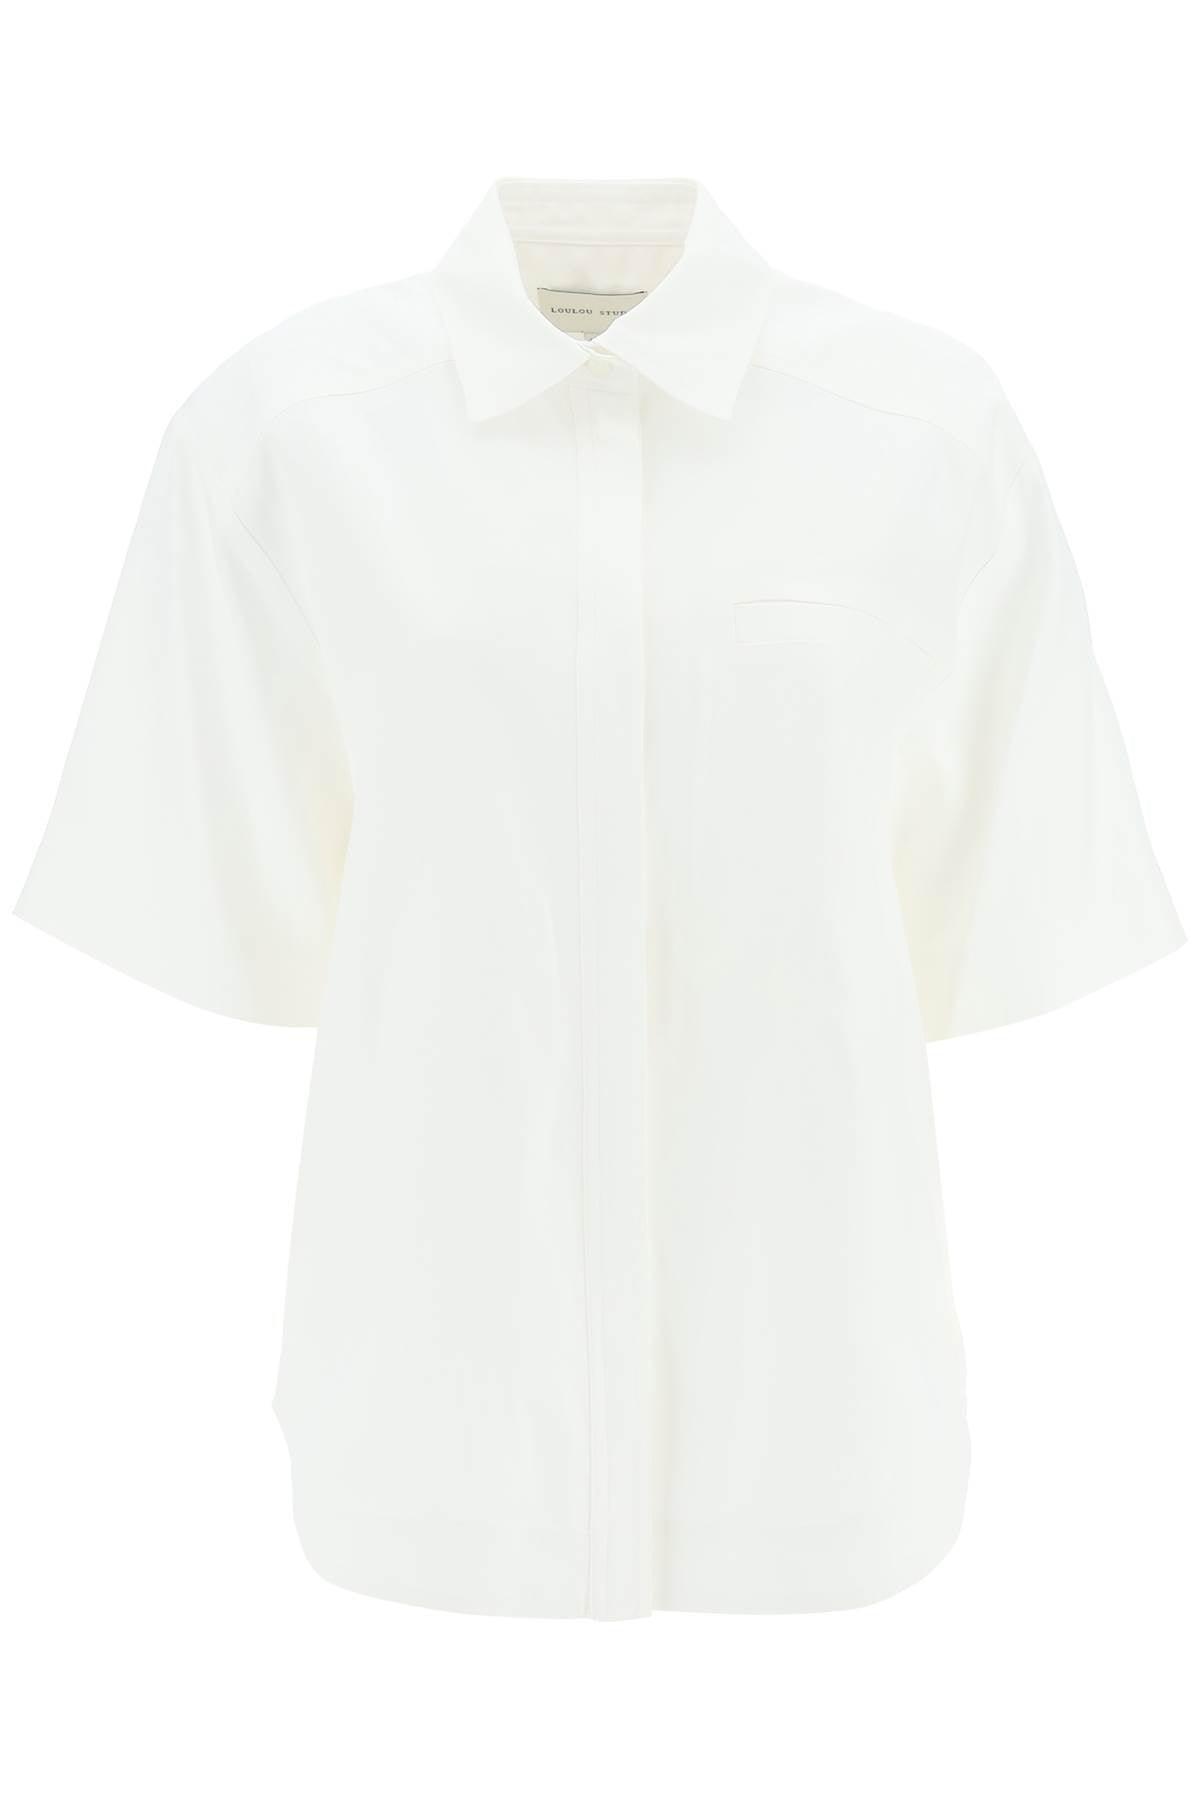 Loulou Studio Oversized Viscose And Linen Short Sleeved Shirt - JOHN JULIA